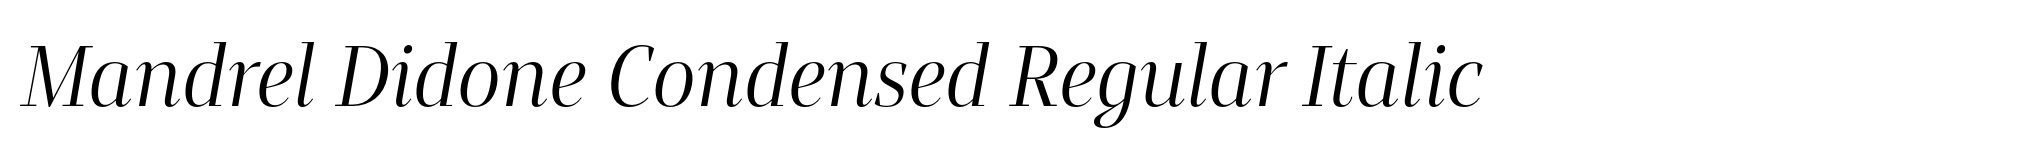 Mandrel Didone Condensed Regular Italic image